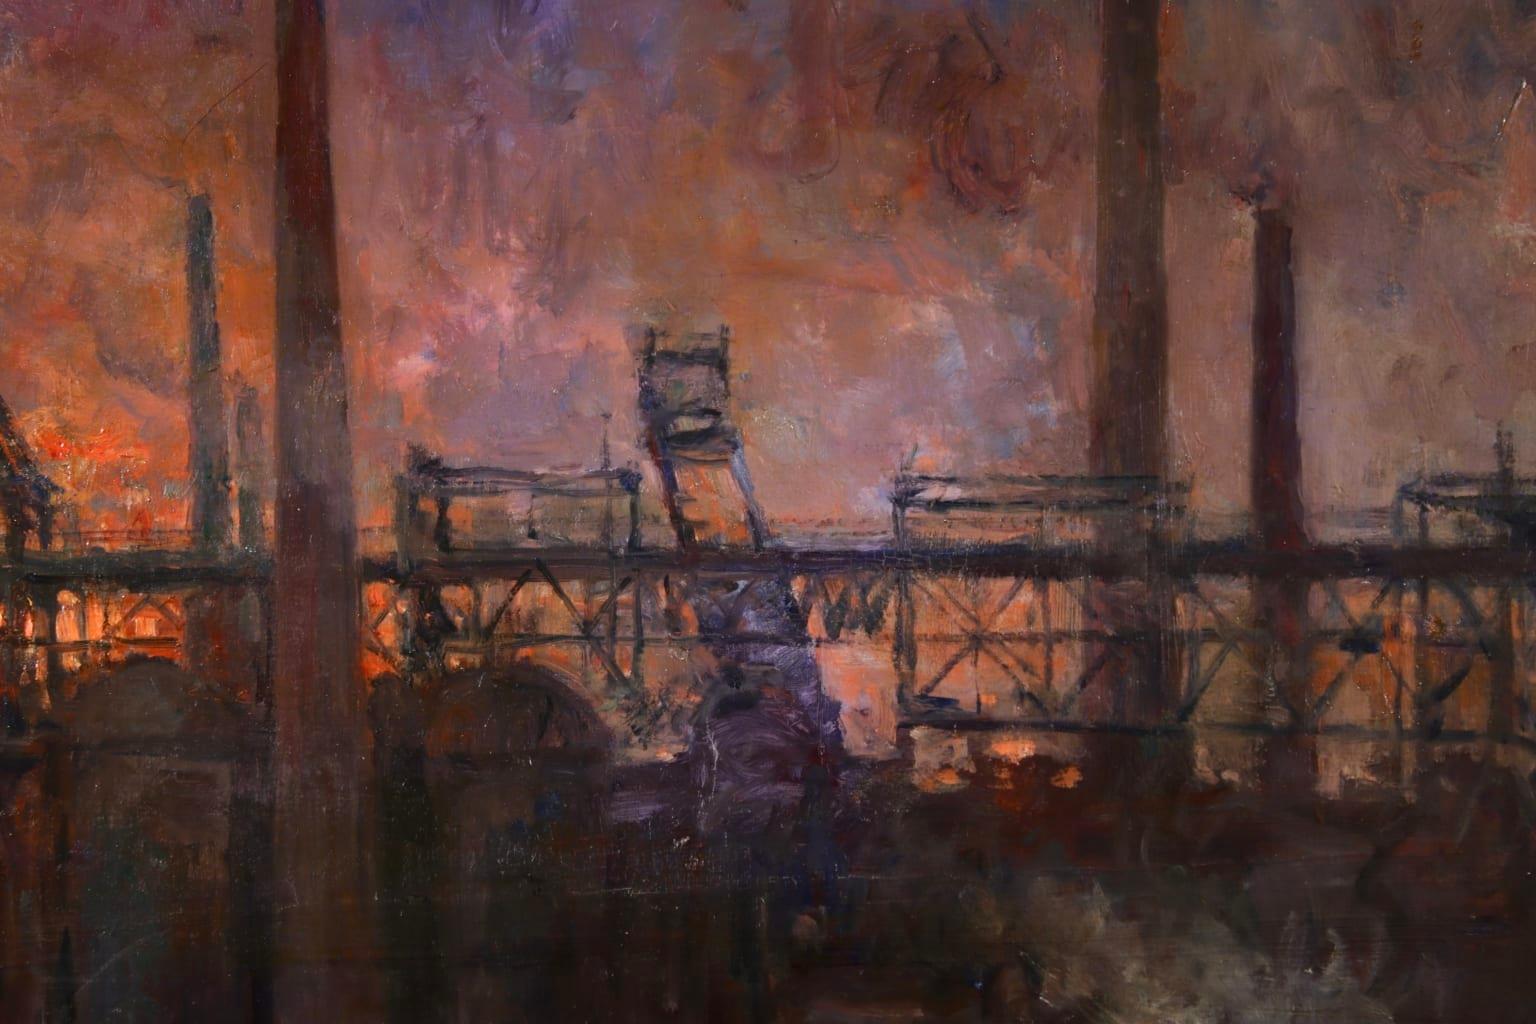 Blast Furnaces - Night - Realist Oil, Industrial Cityscape by Oswald Poreau 4